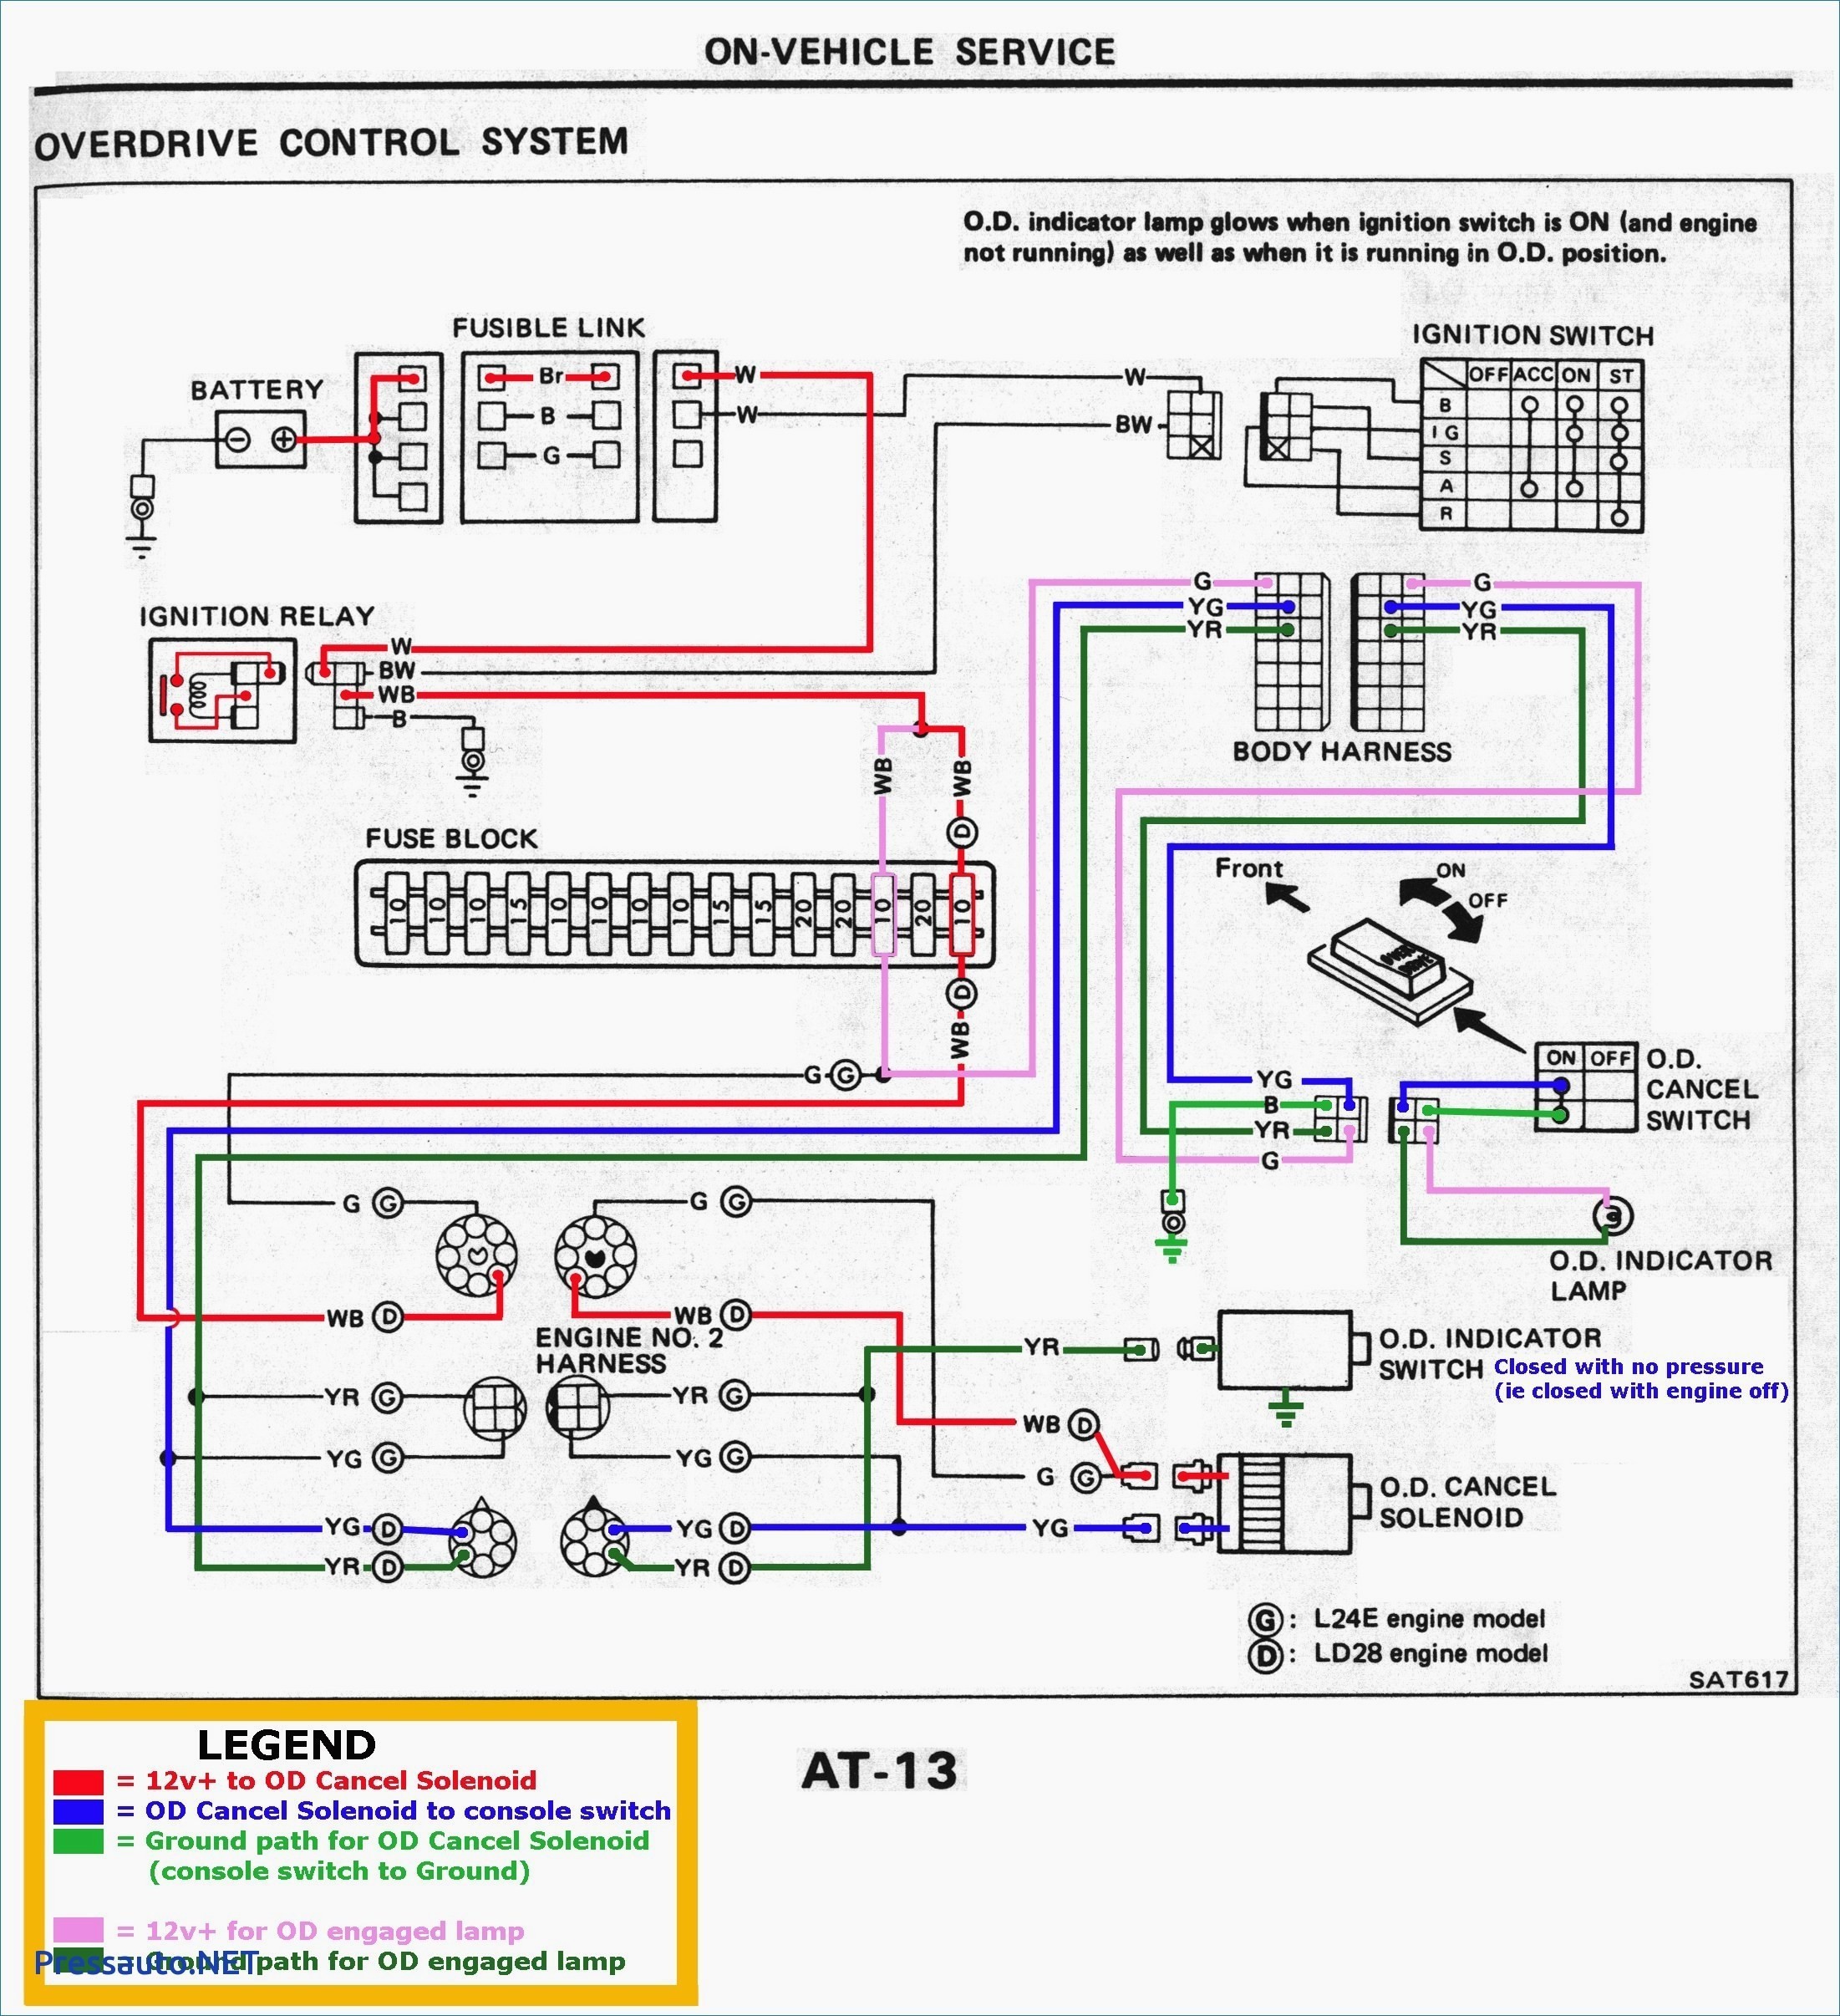 Spitronics orion 2 Wiring Diagram Spitronics Engine Management Wiring Diagram Of Spitronics orion 2 Wiring Diagram